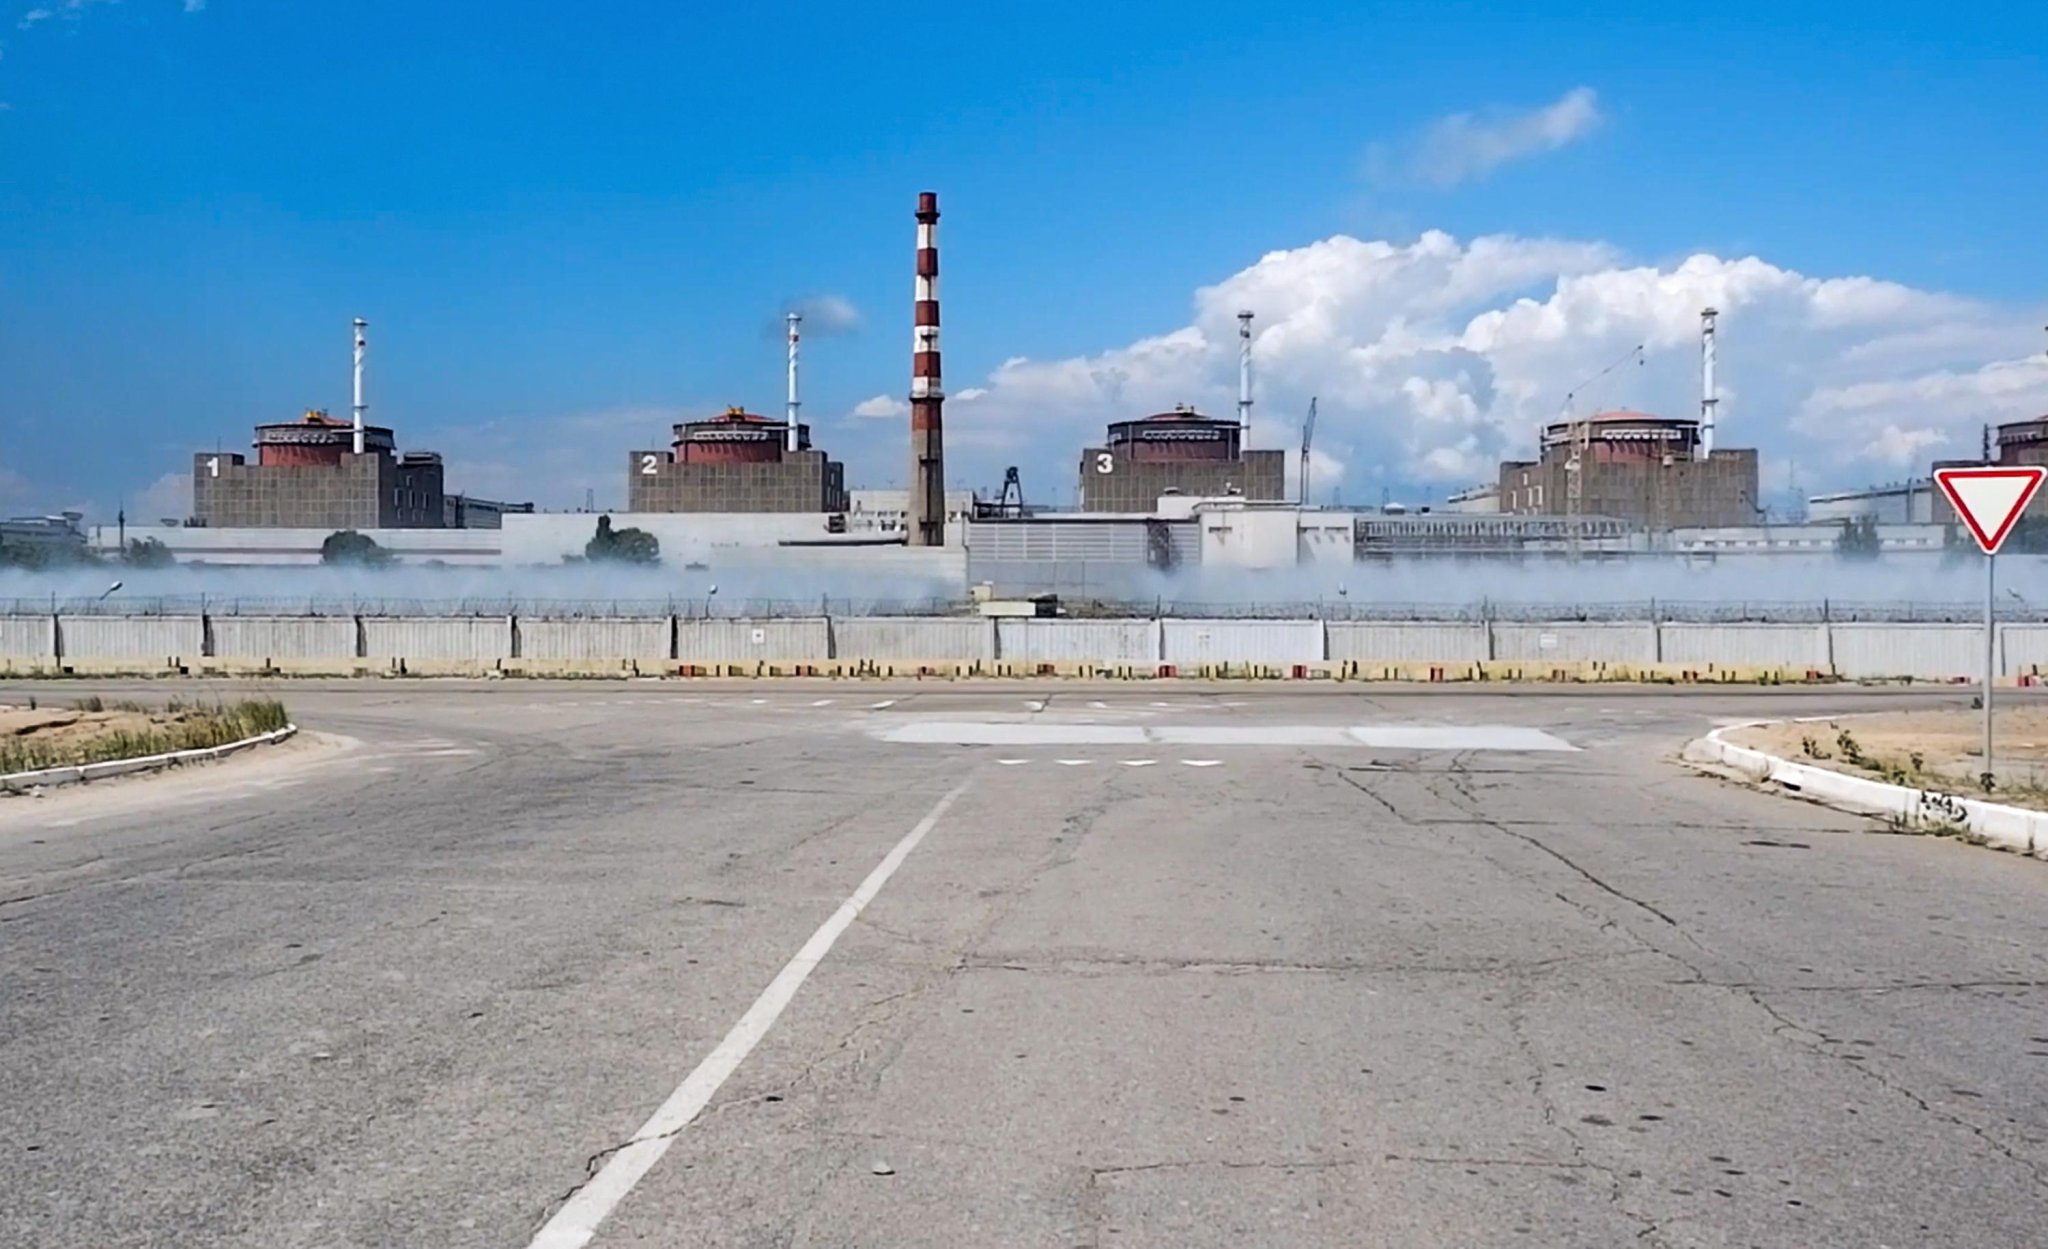 EXPLAINER: Fighting in Ukraine endangers big nuclear plant